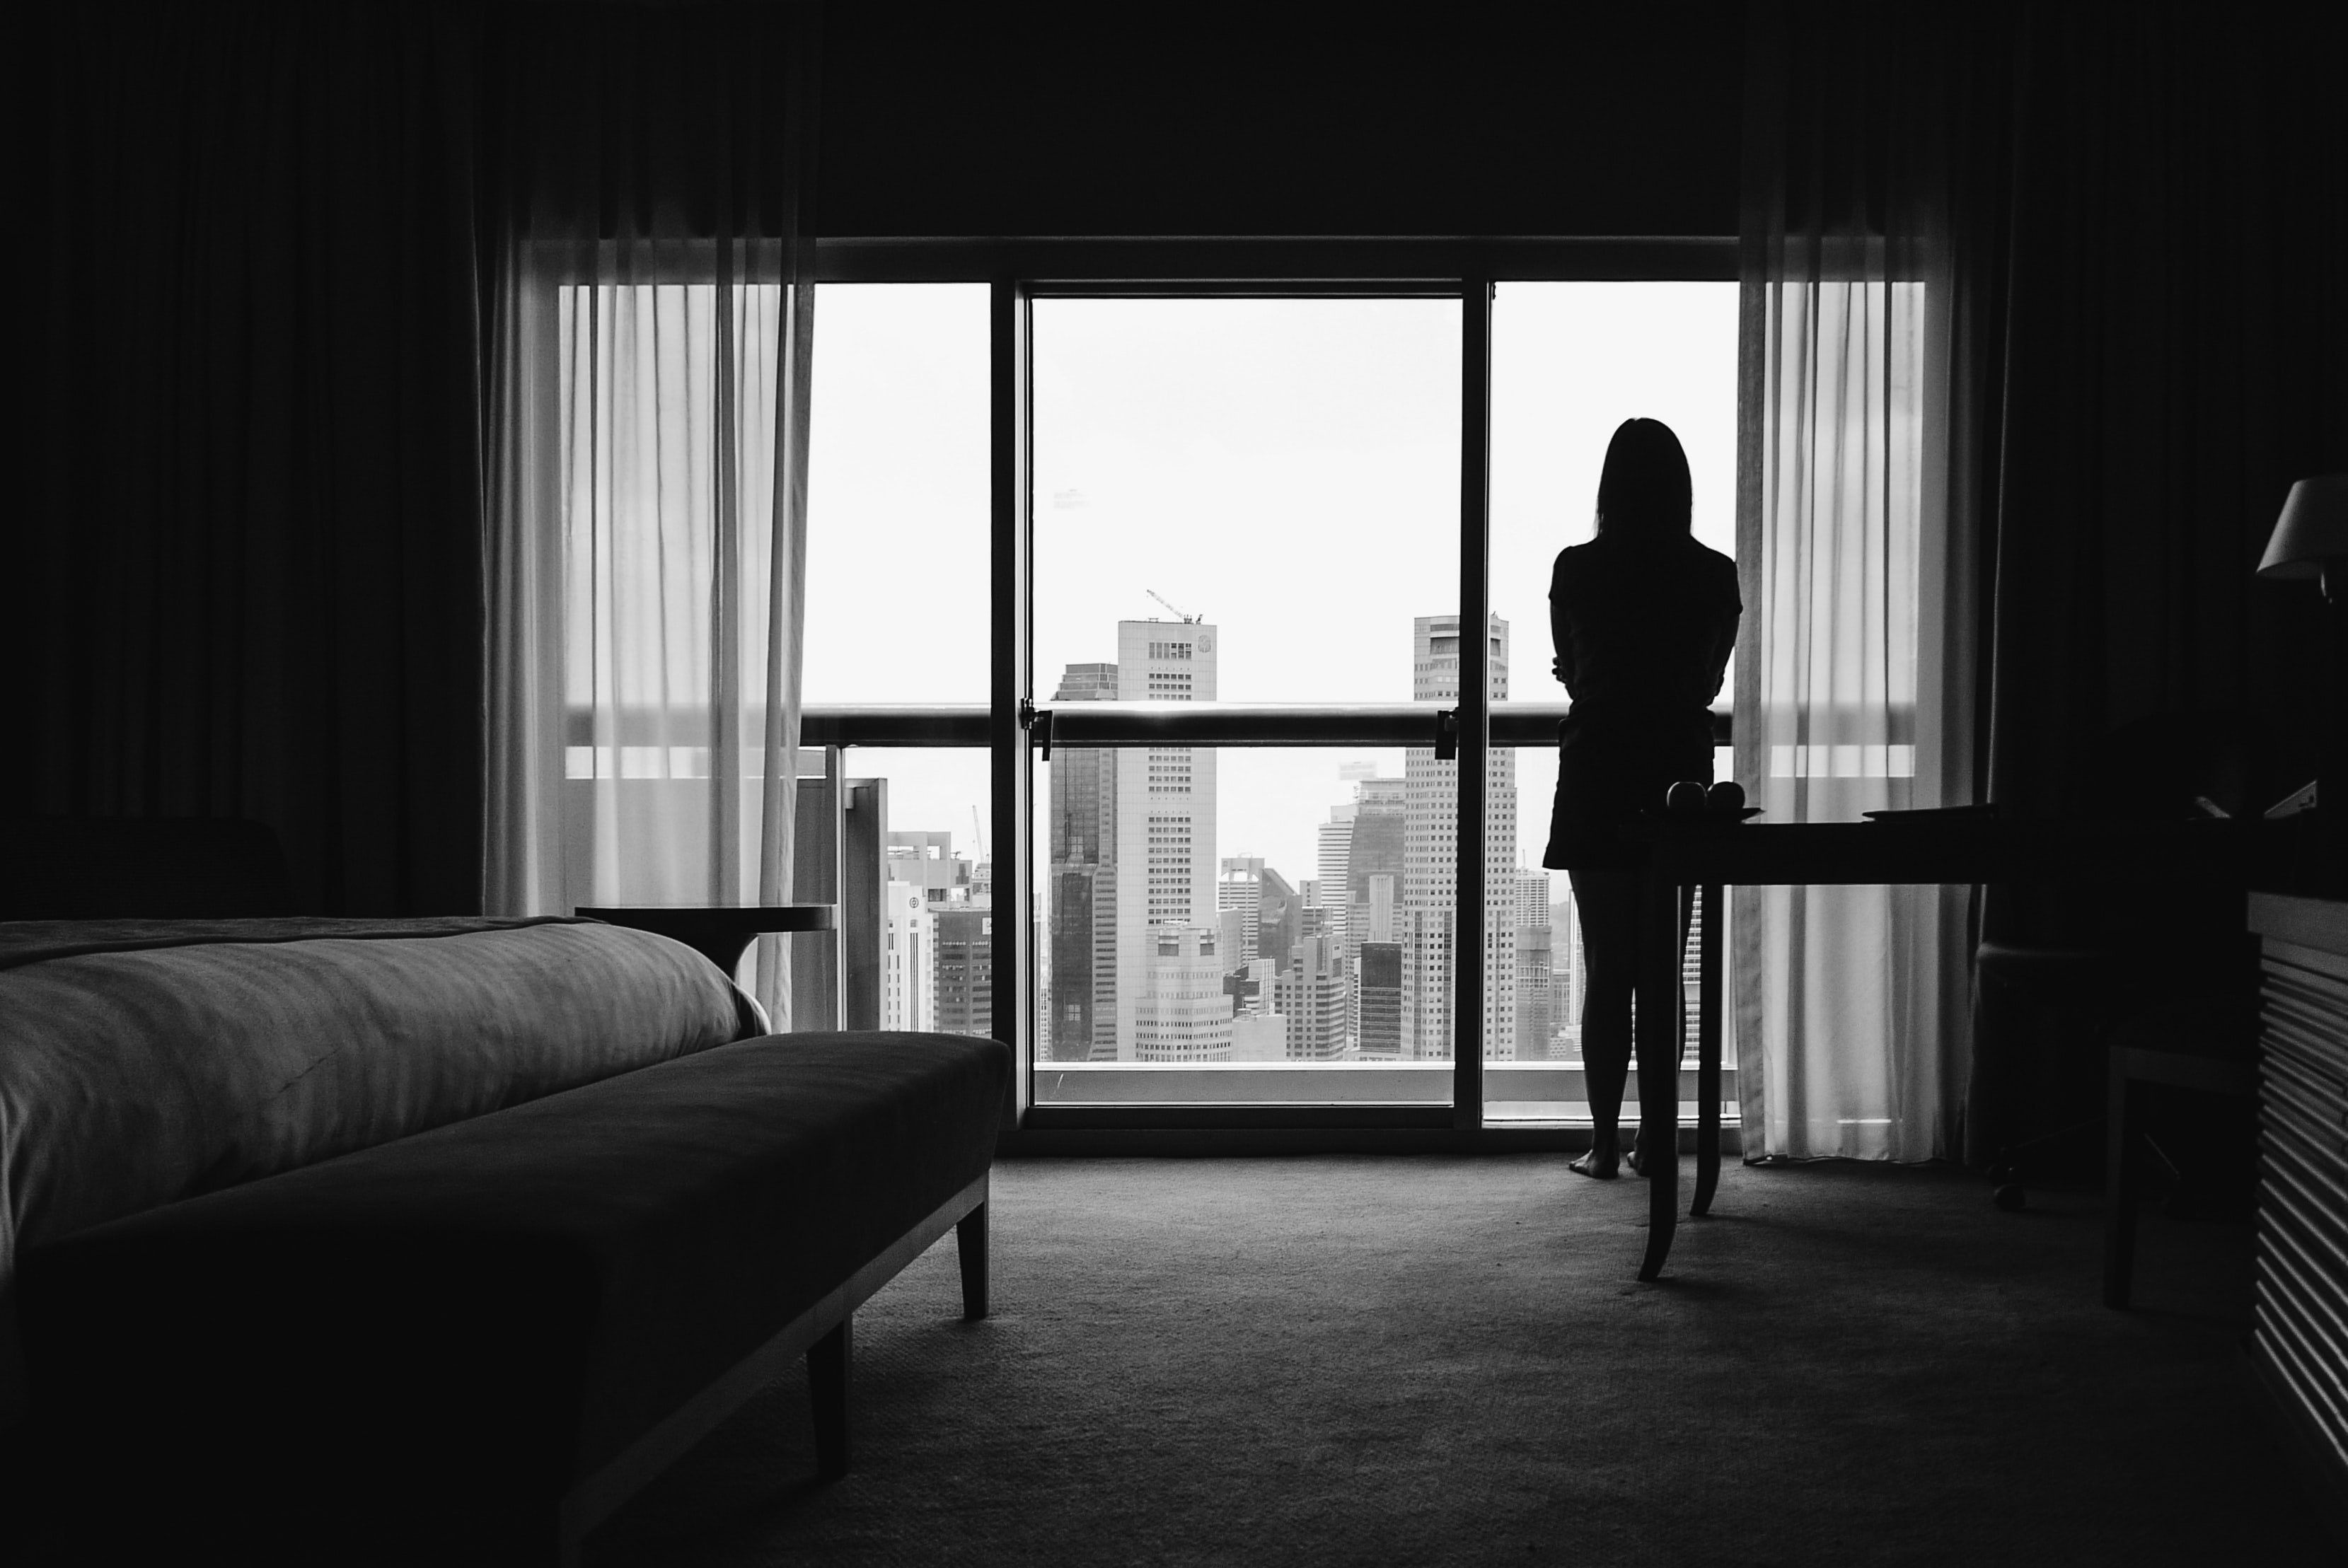 Woman standing next to a window | Source: Unsplash